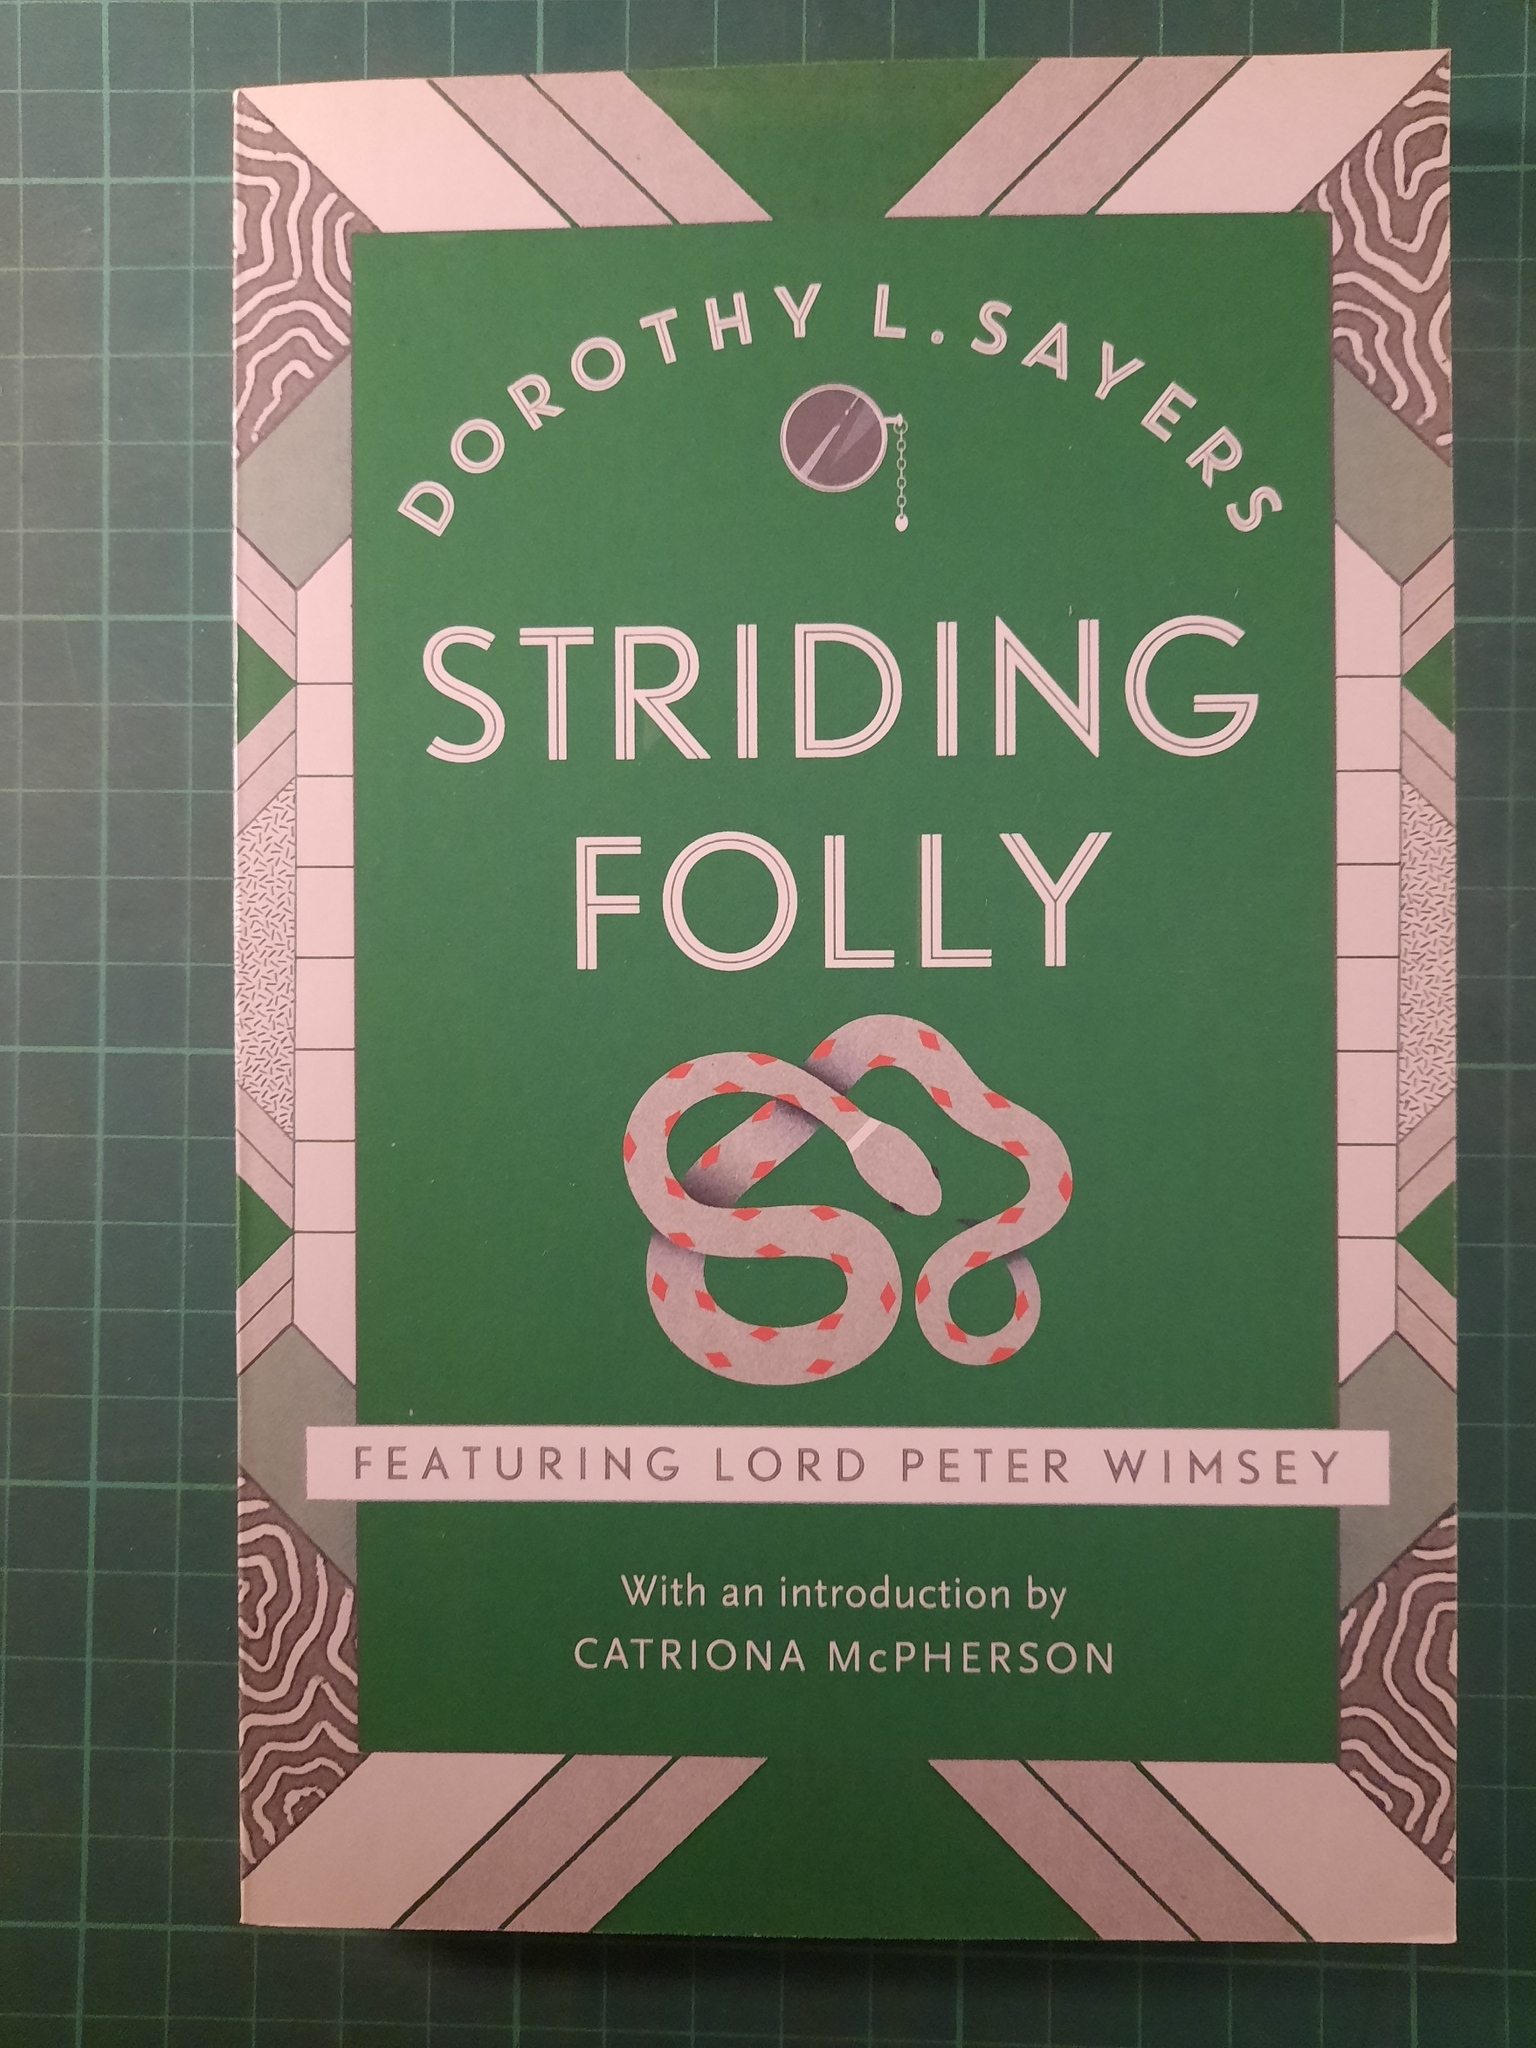 Dorothy L. Sayers : Striding folly